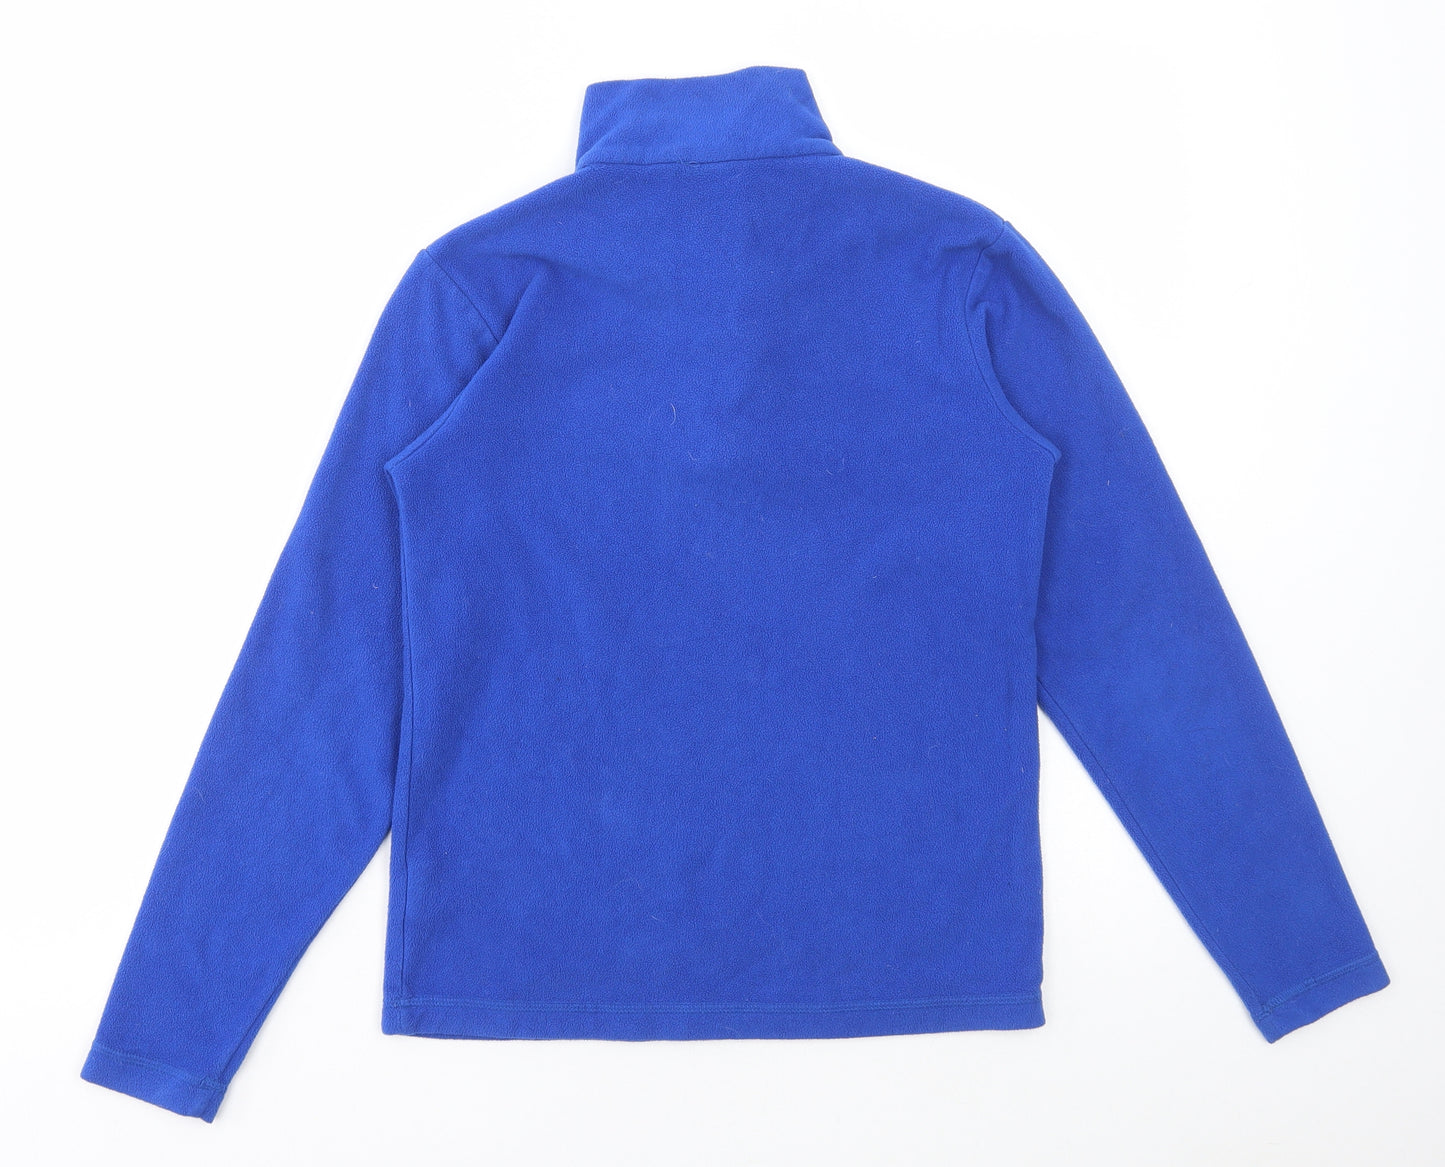 Gelert Boys Blue Polyester Pullover Sweatshirt Size 11-12 Years Zip